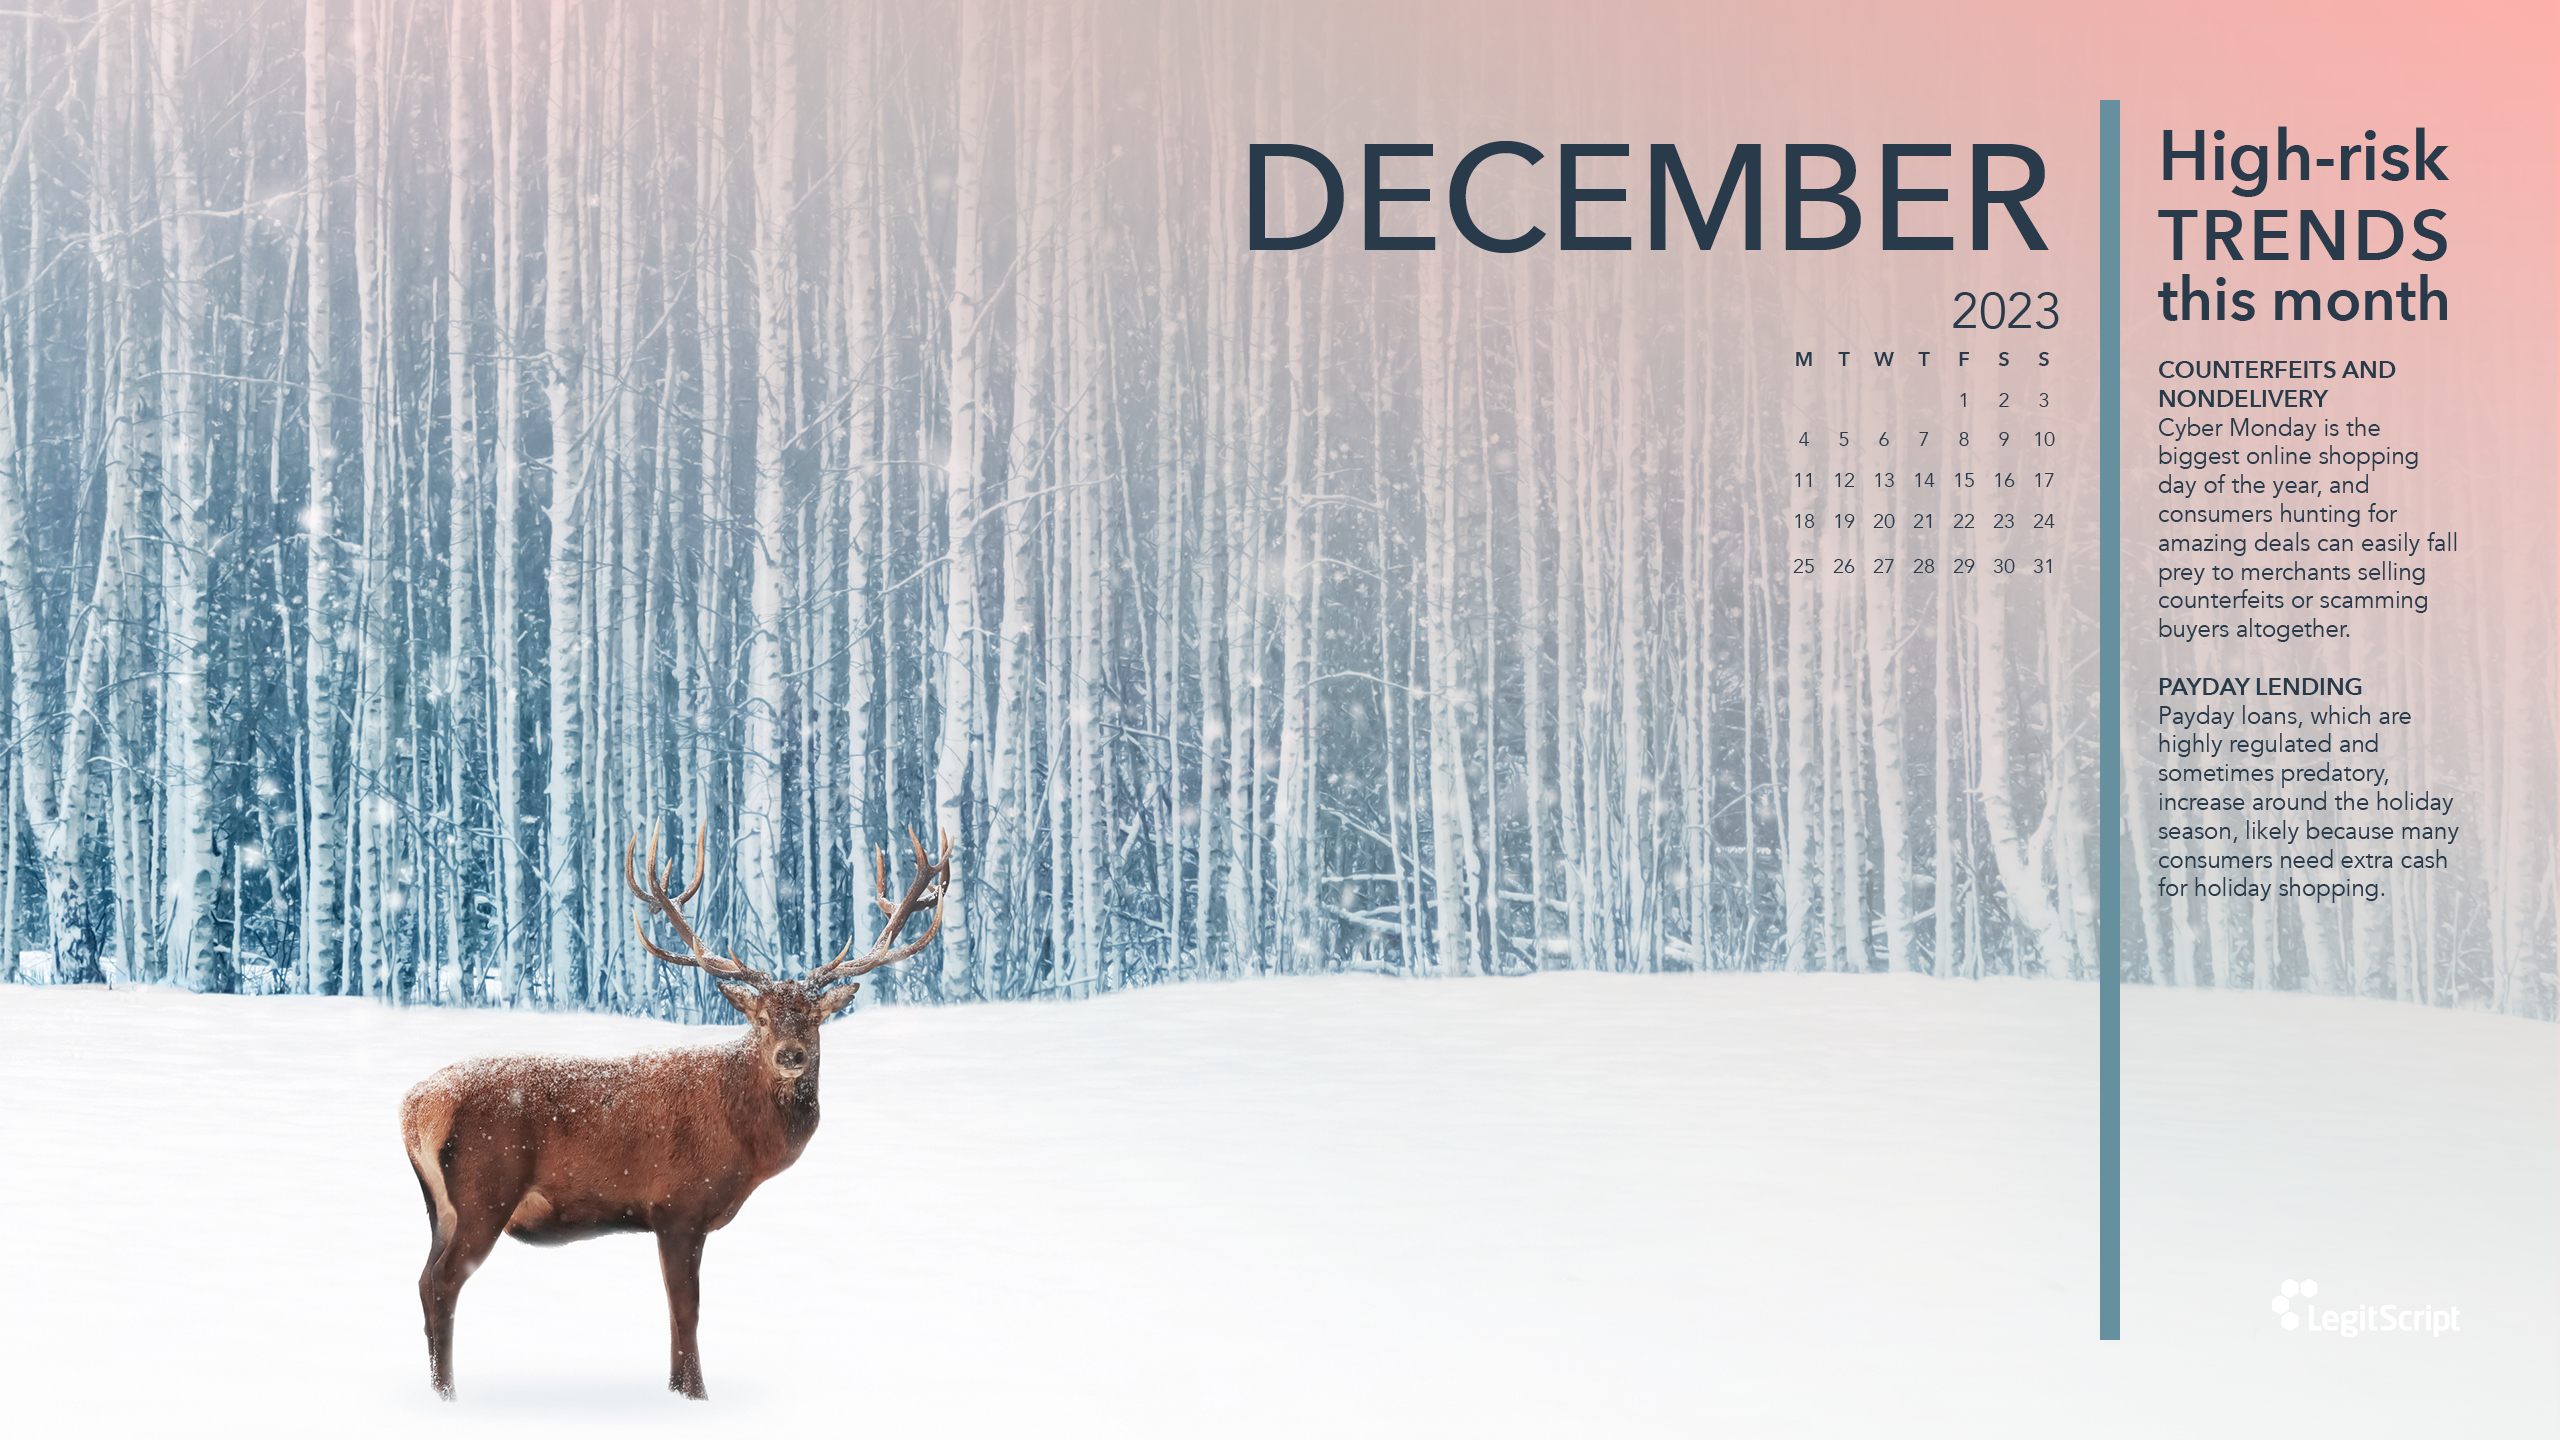 Seasonal High Risk Trends desktop background for December 2.